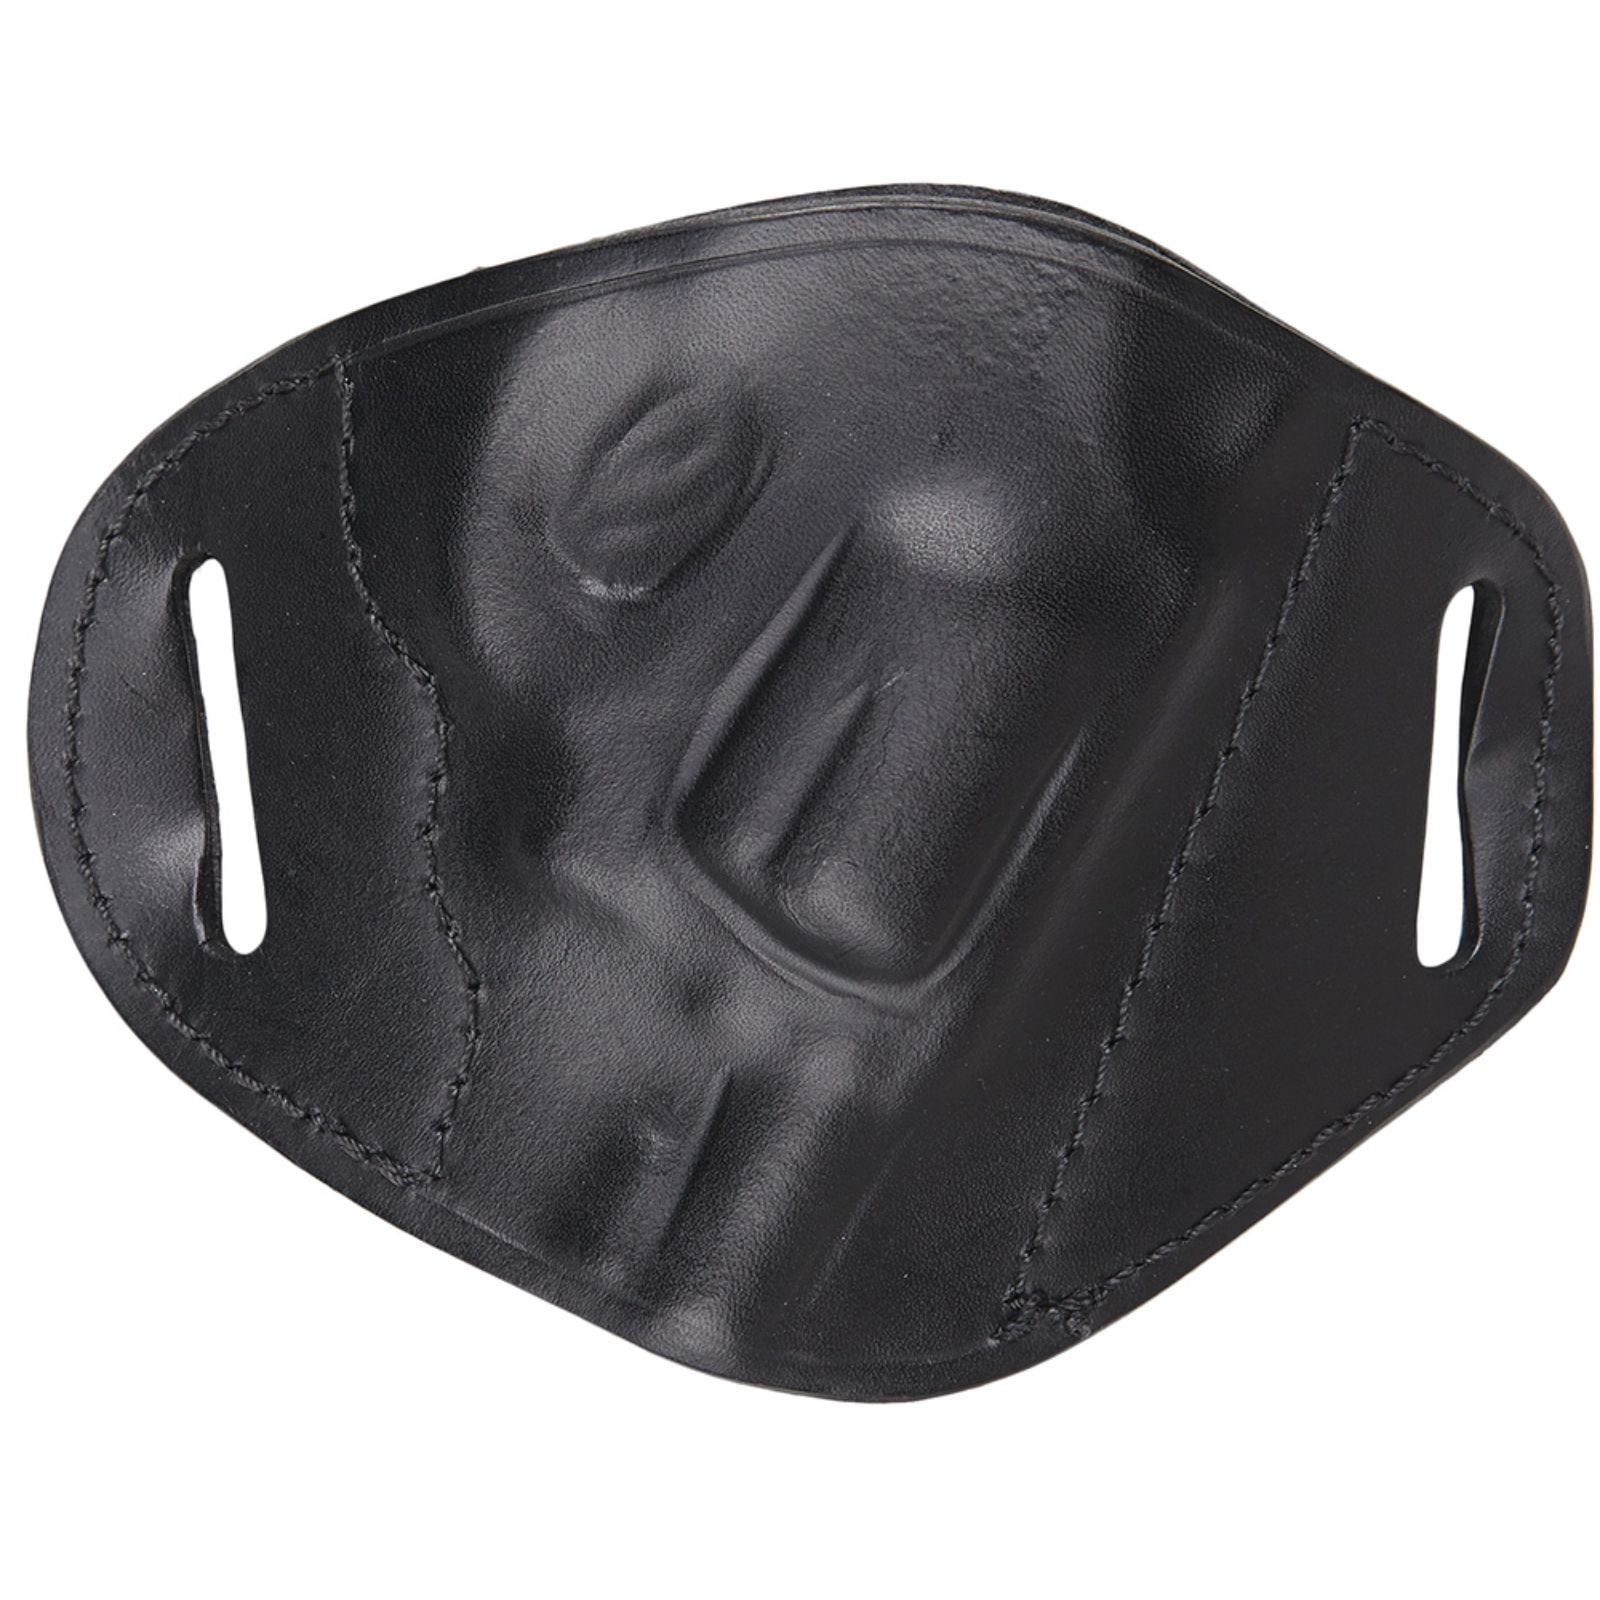 Bulldog Mltm Belt Slide Medium Automatic Handgun Holster Right Hand Leather Tan for sale online